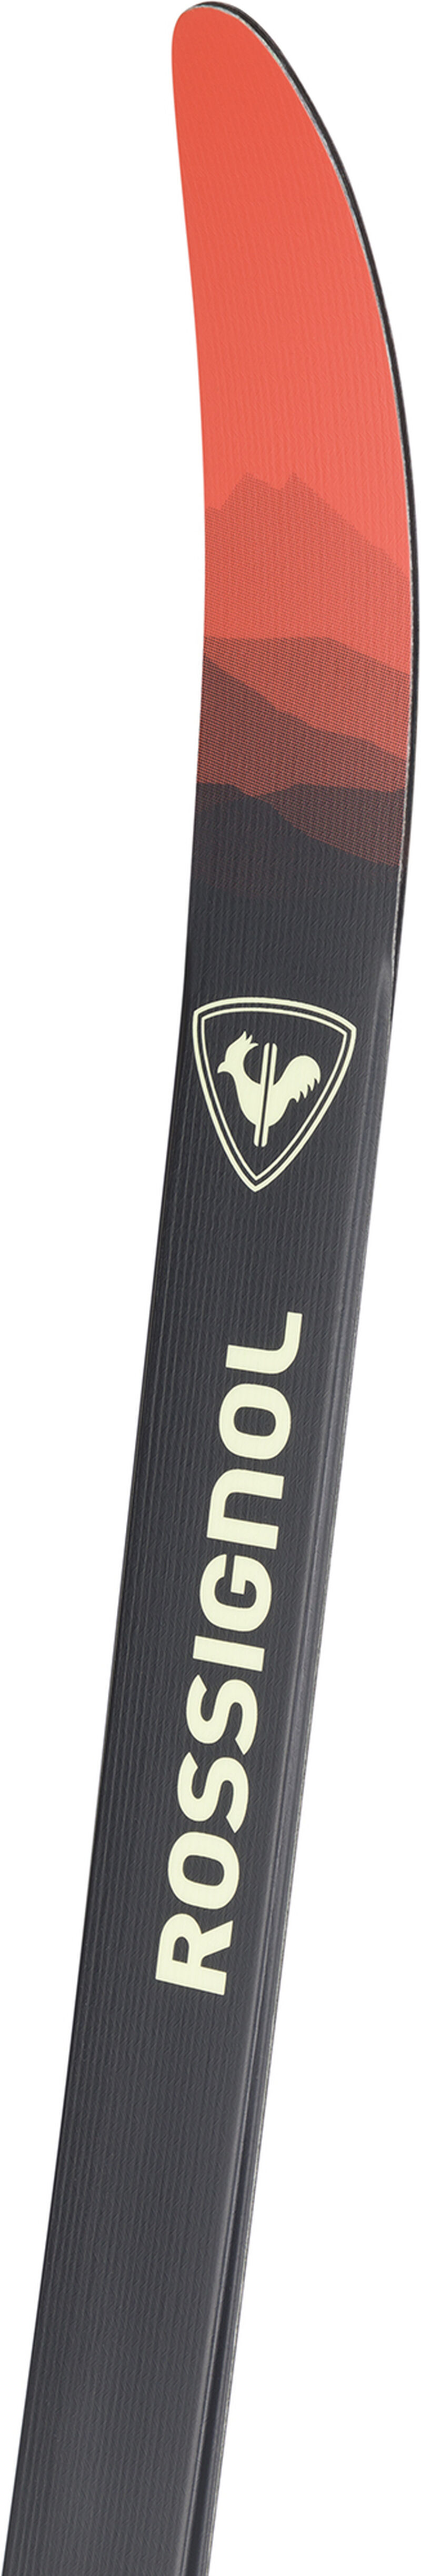 Junior Nordic Skis Xt-Vent Wxls for short sizes